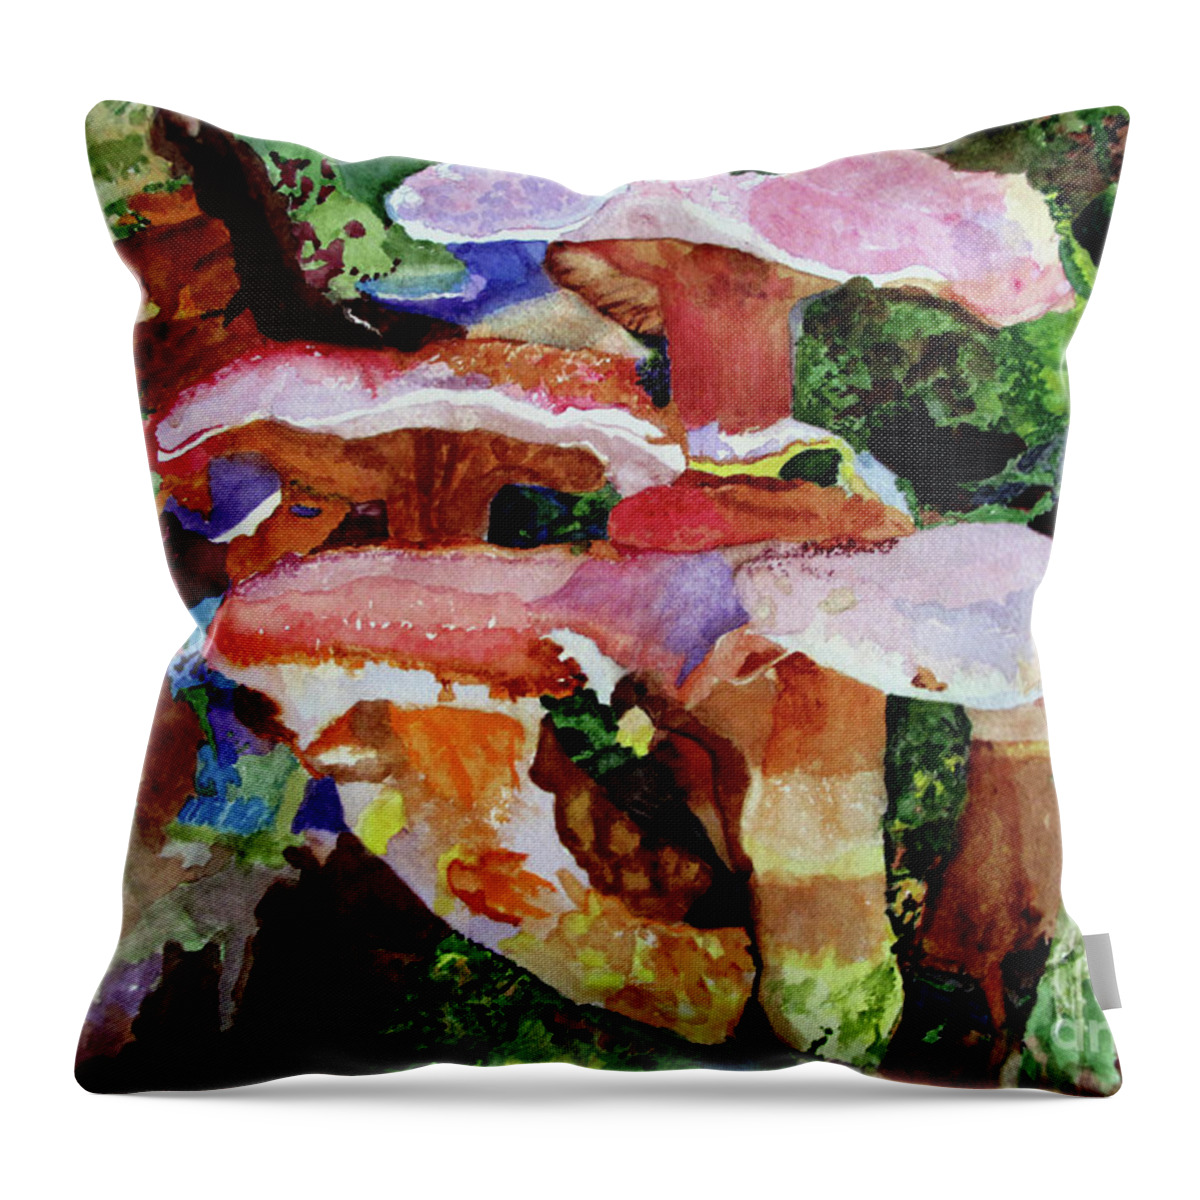 Mushroom Throw Pillow featuring the painting Mushroom Garden by Sandy McIntire